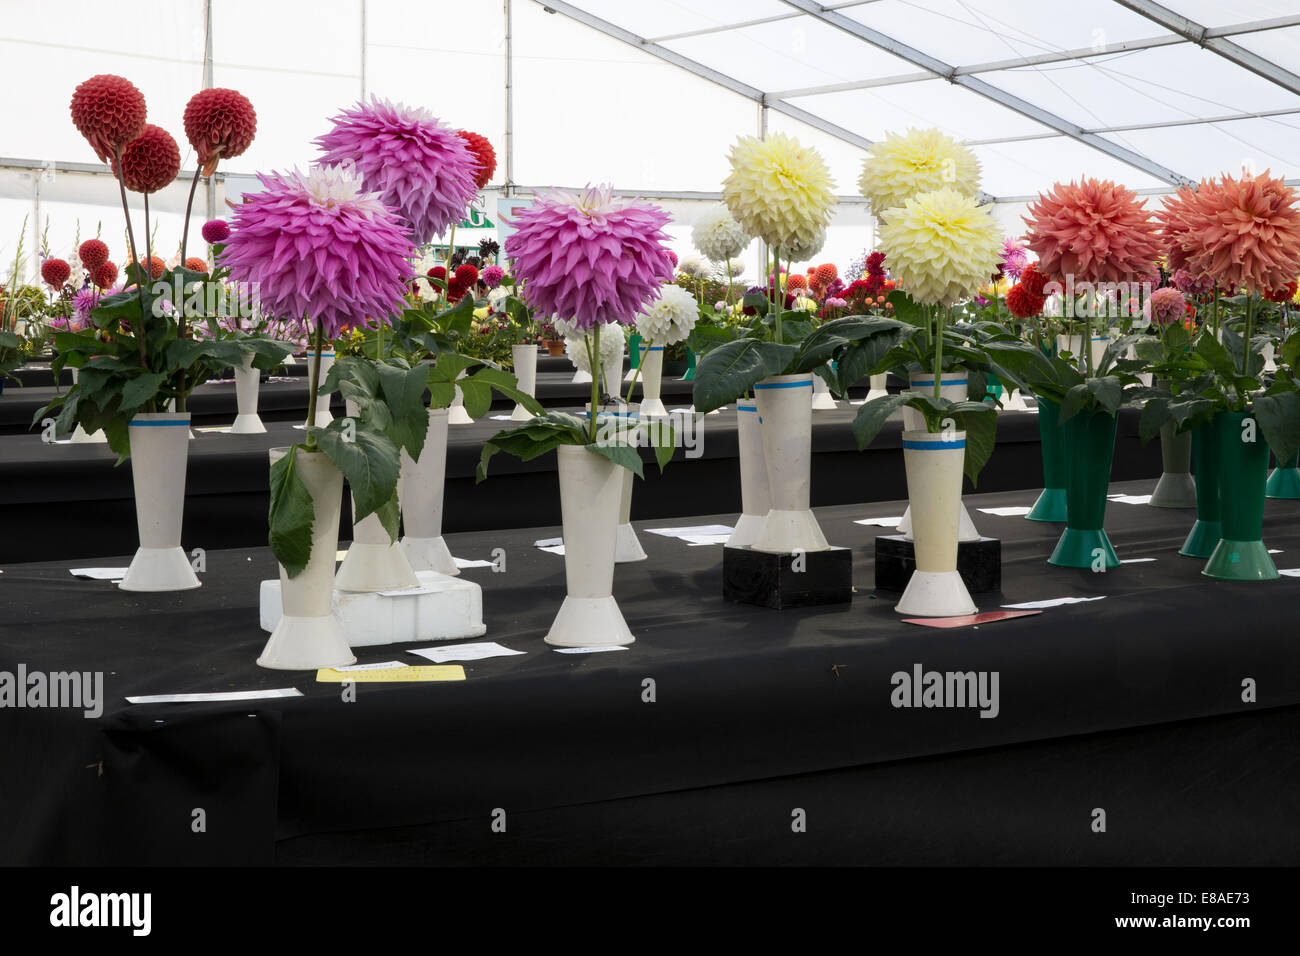 Malvern Autumn RHS show 2015 display of prize winning dahlia flowers Stock Photo